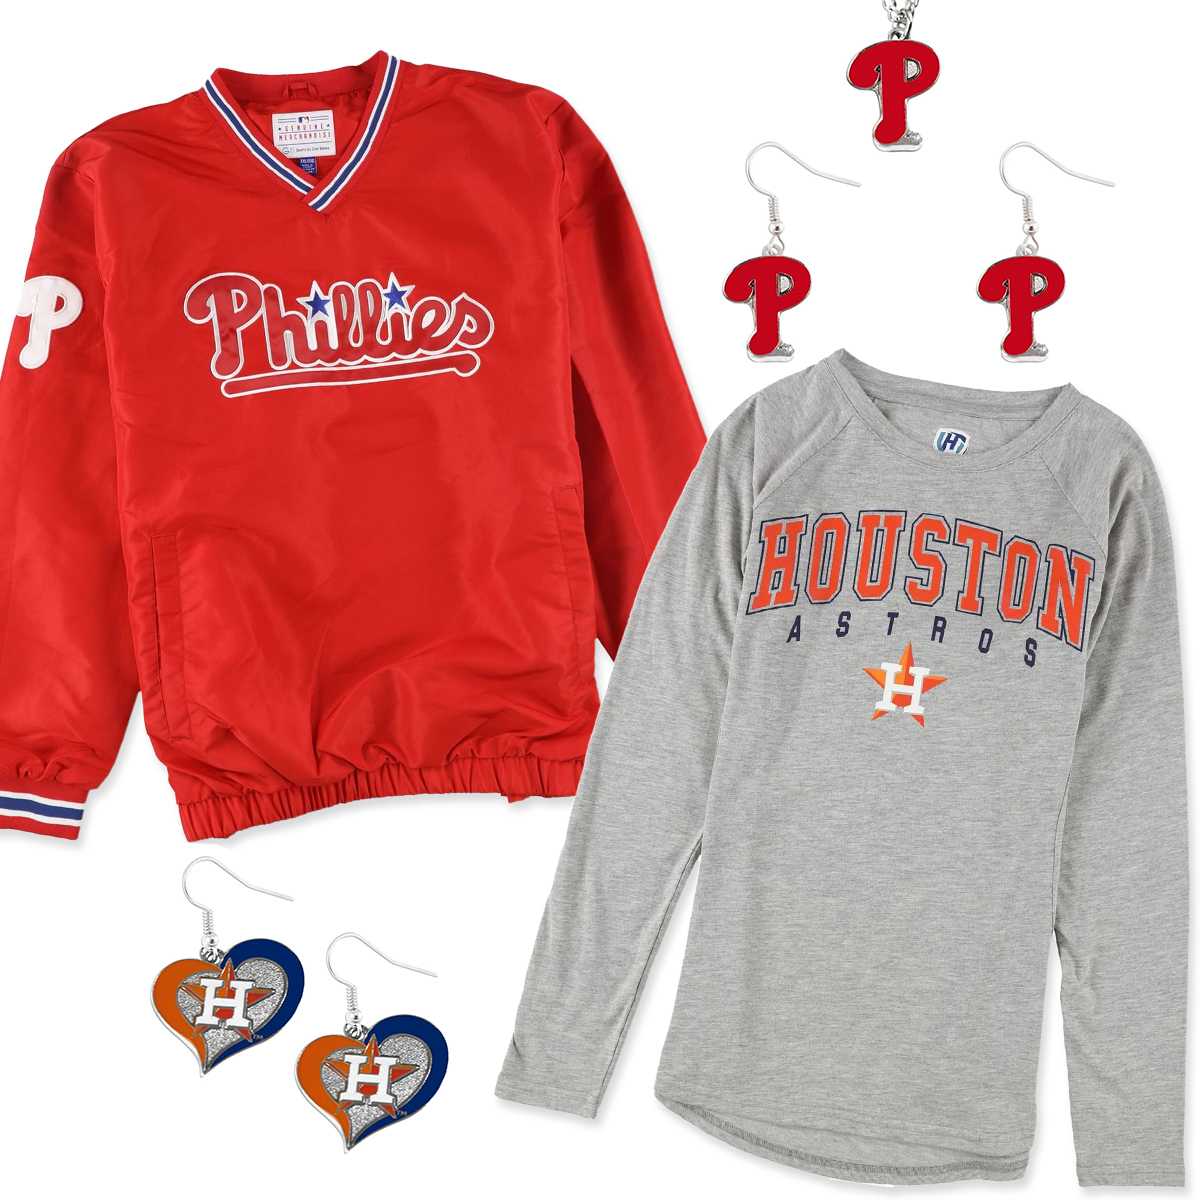 Houston Astros Vs Philadelphia Phillies Houston You Have Problem shirt